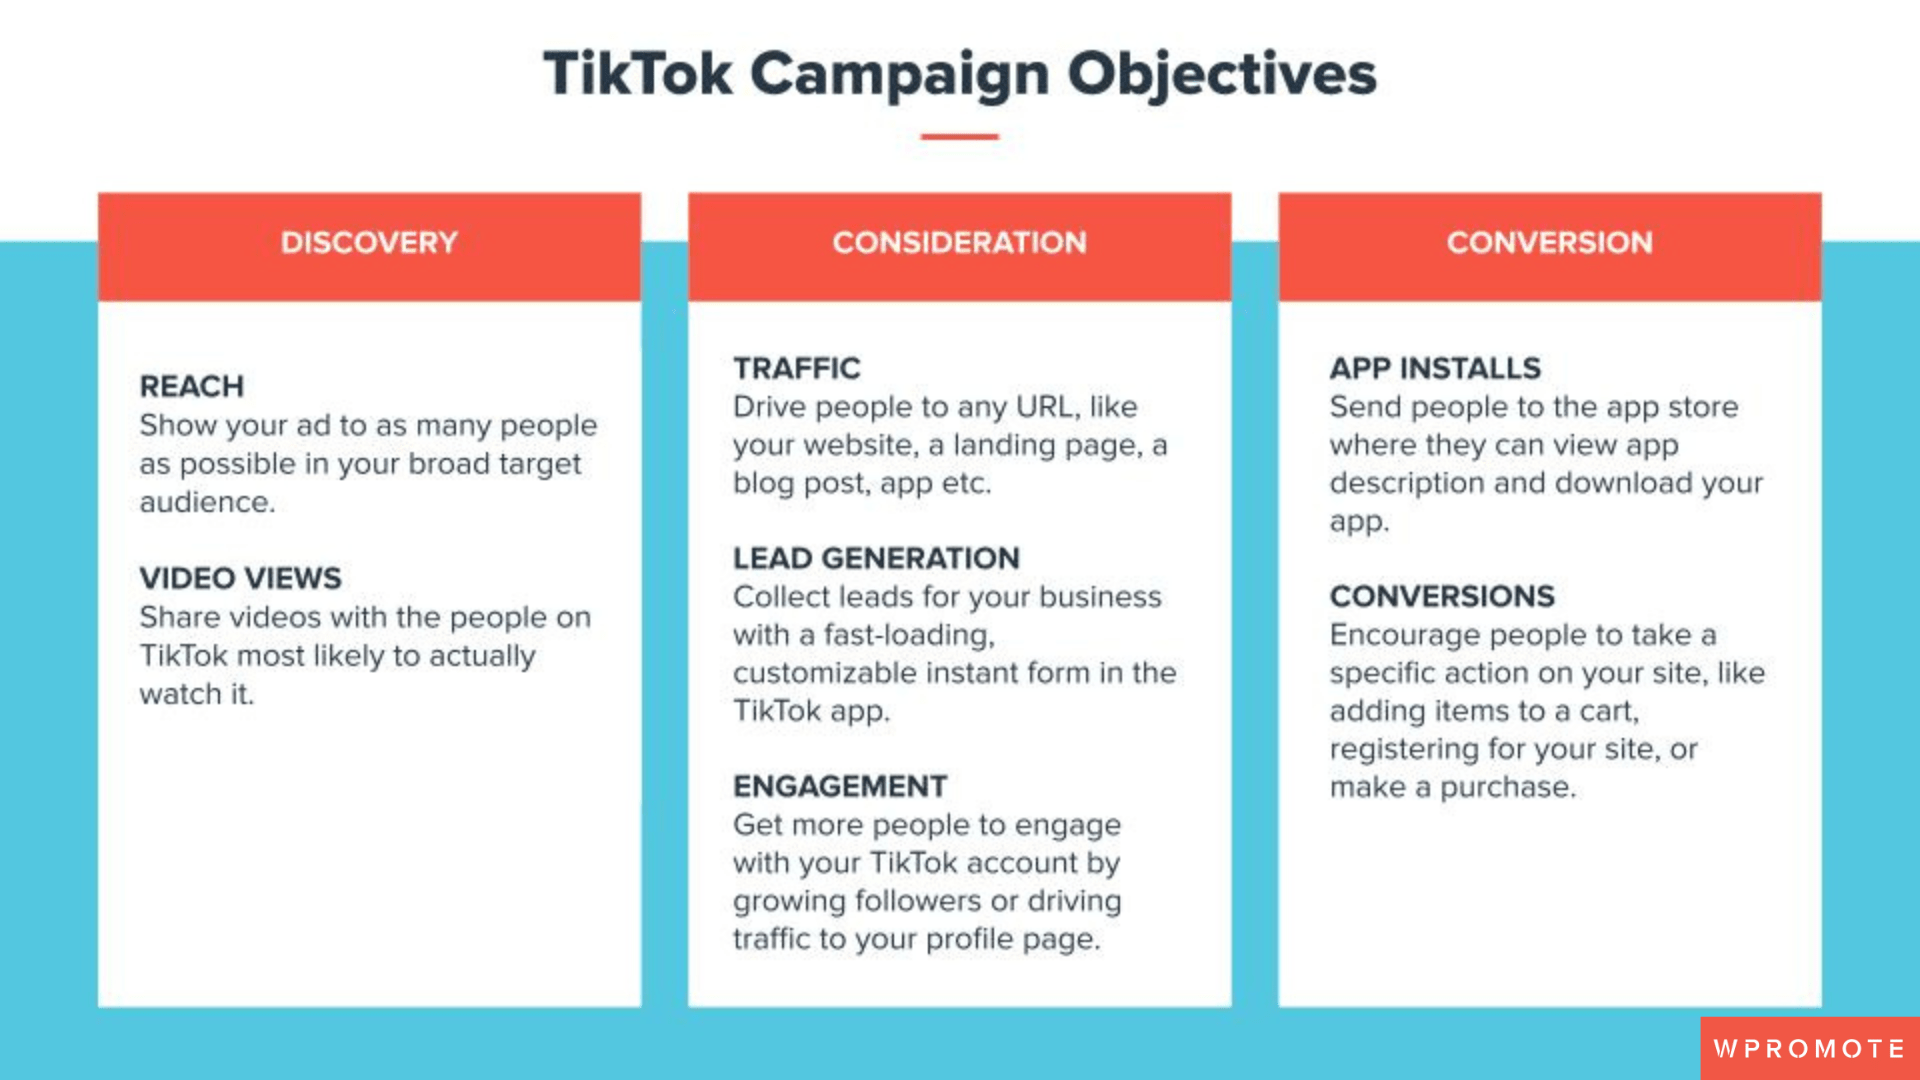 TikTok Profile: How to Optimize It for Success